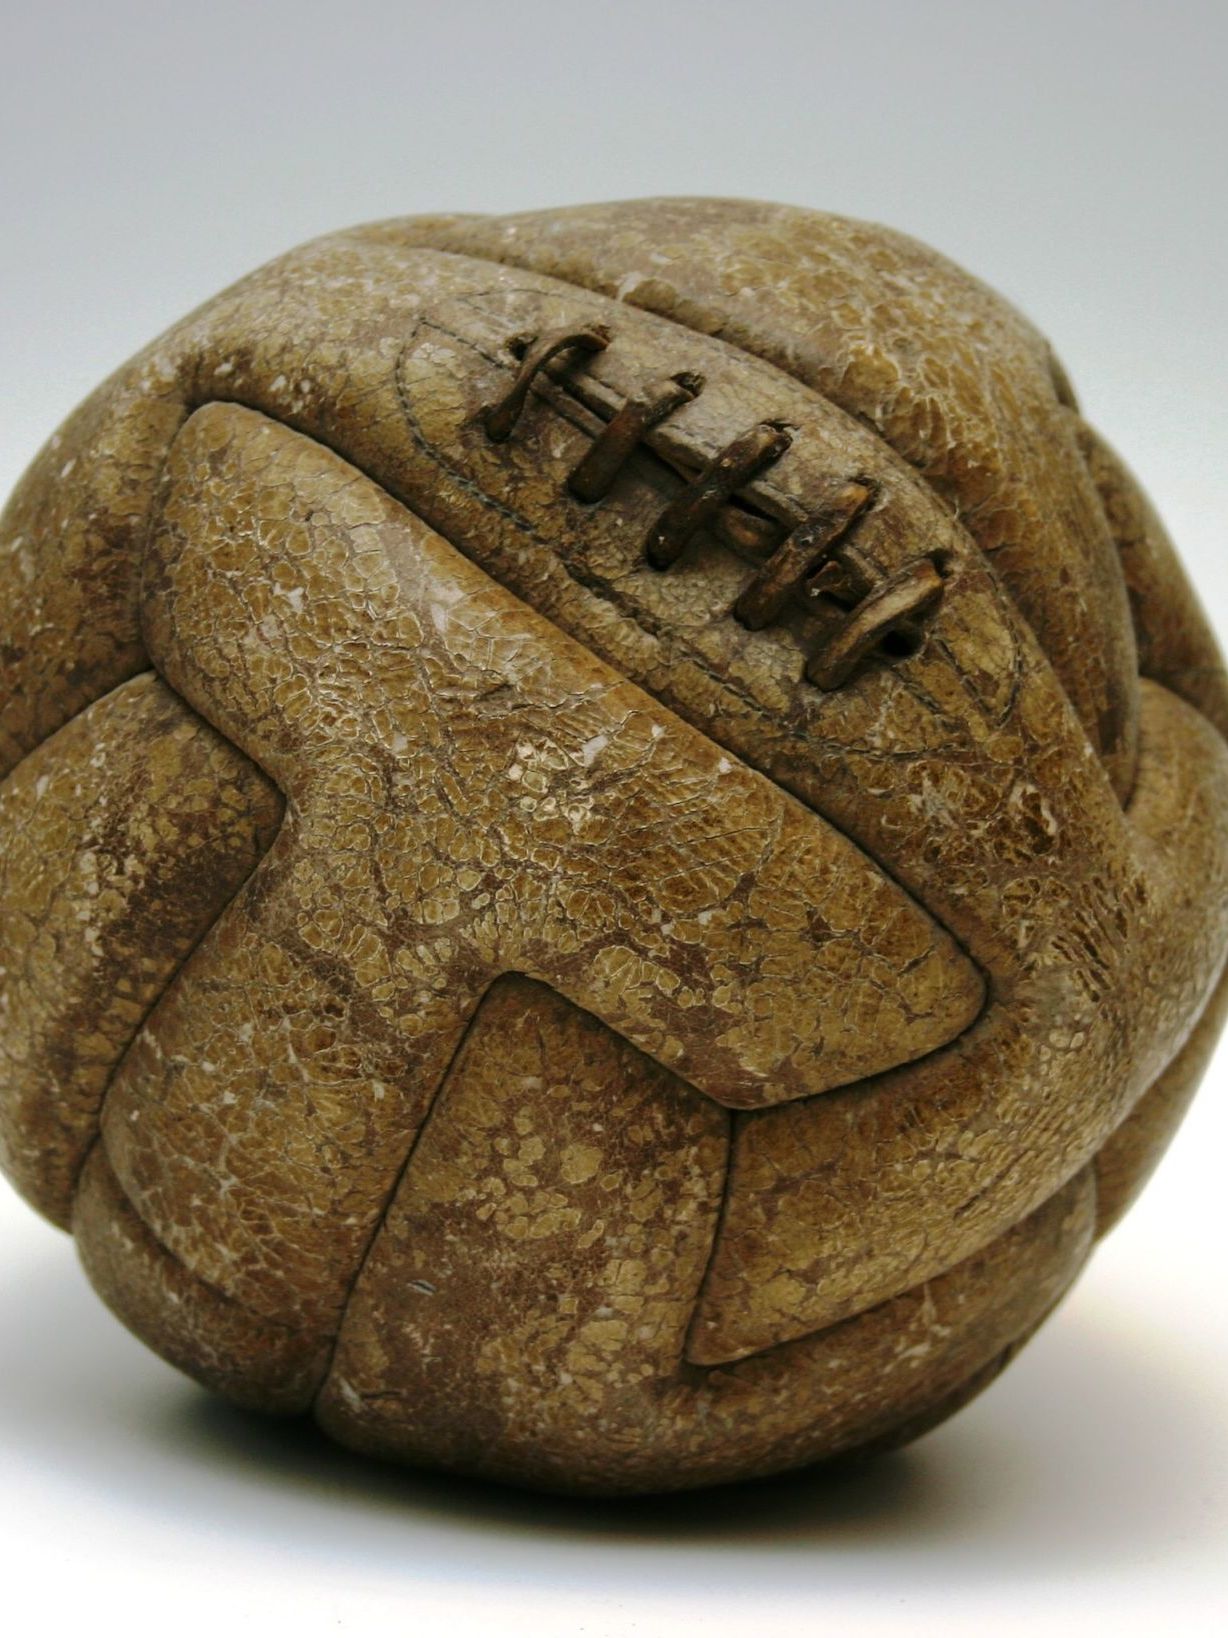 Ballon de la coupe du monde en Uruguay en 1930 © National Museum of Football, Manchester